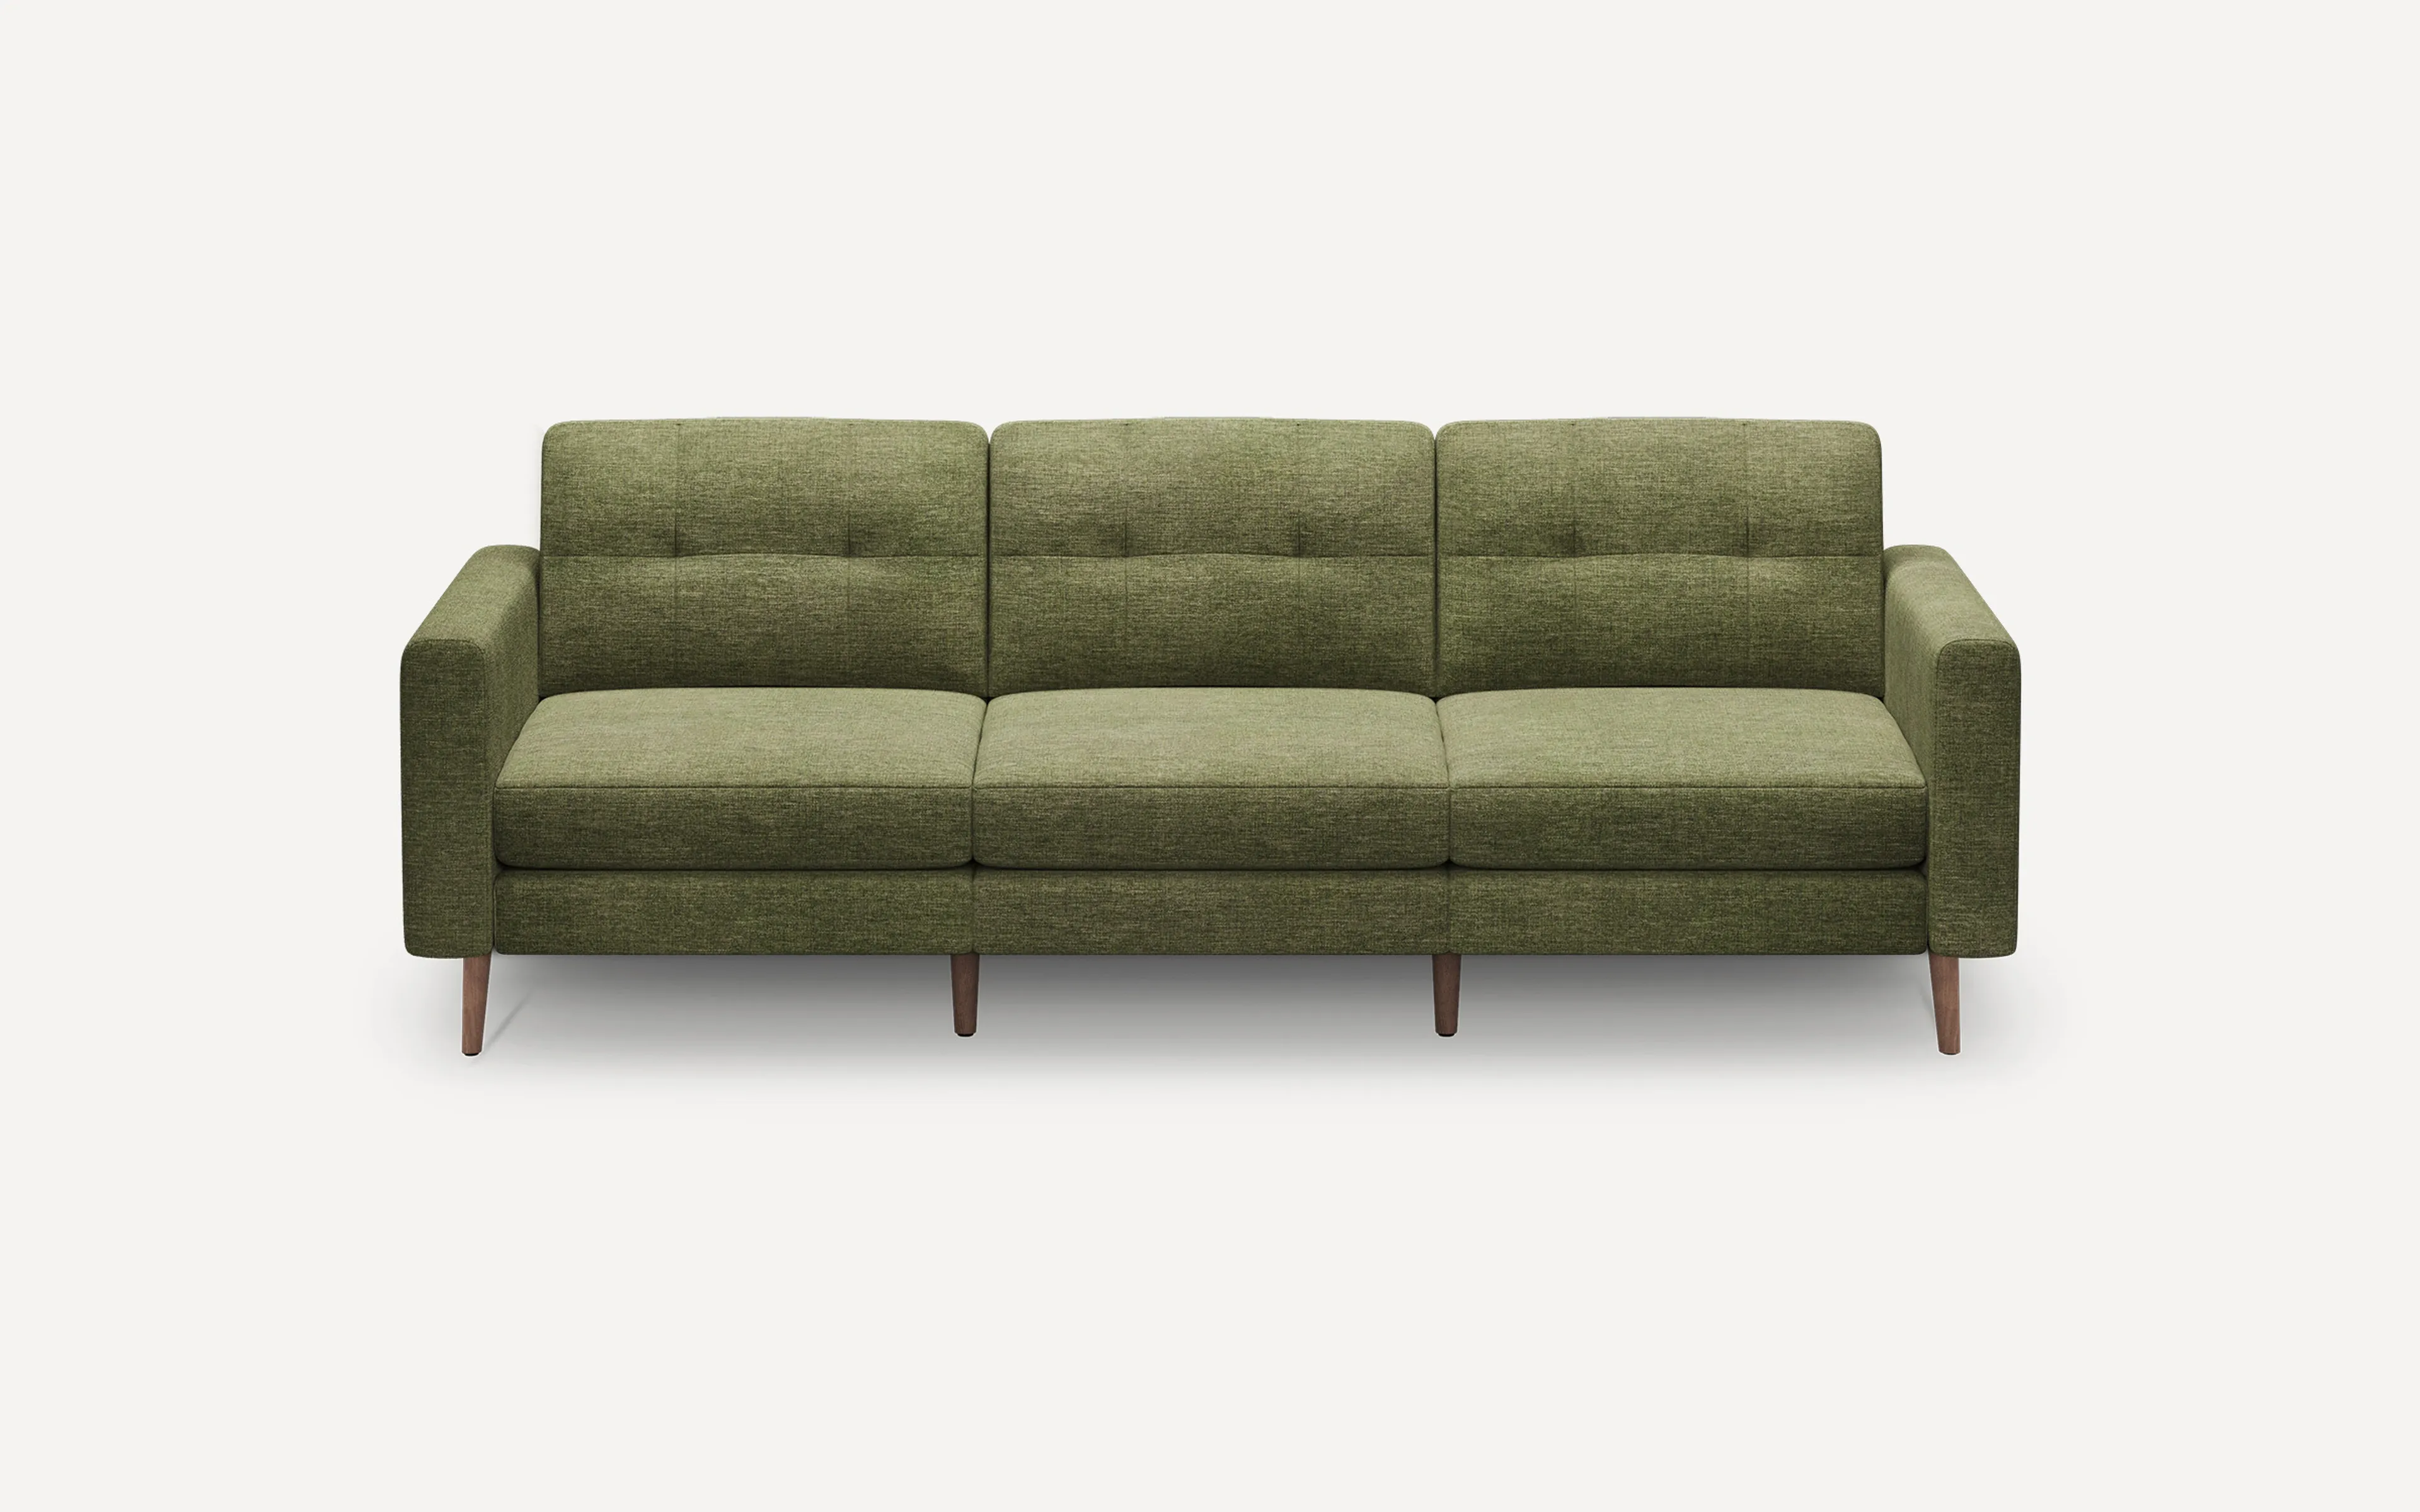 Original Nomad Sofa in Moss Green Fabric